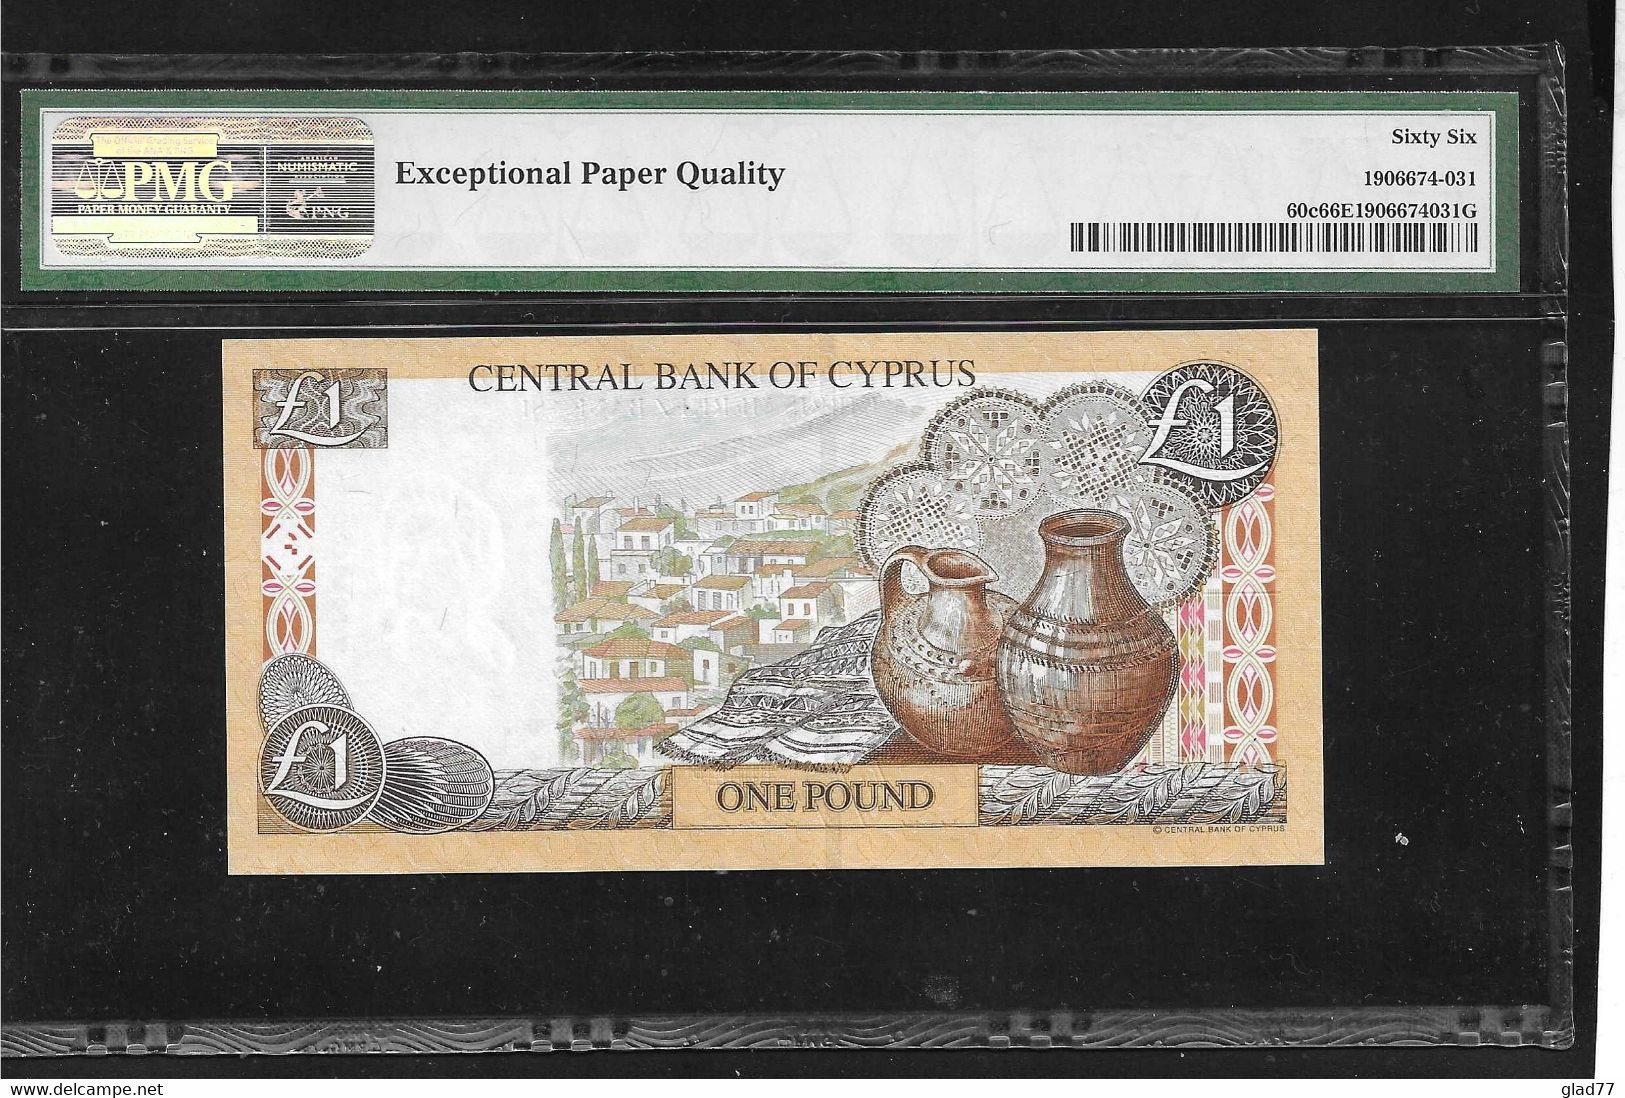 Cyprus  One Pound 1.2.2001 PMG  66 EPQ (Exceptional Paper Quality) GEM UNC! - Cyprus